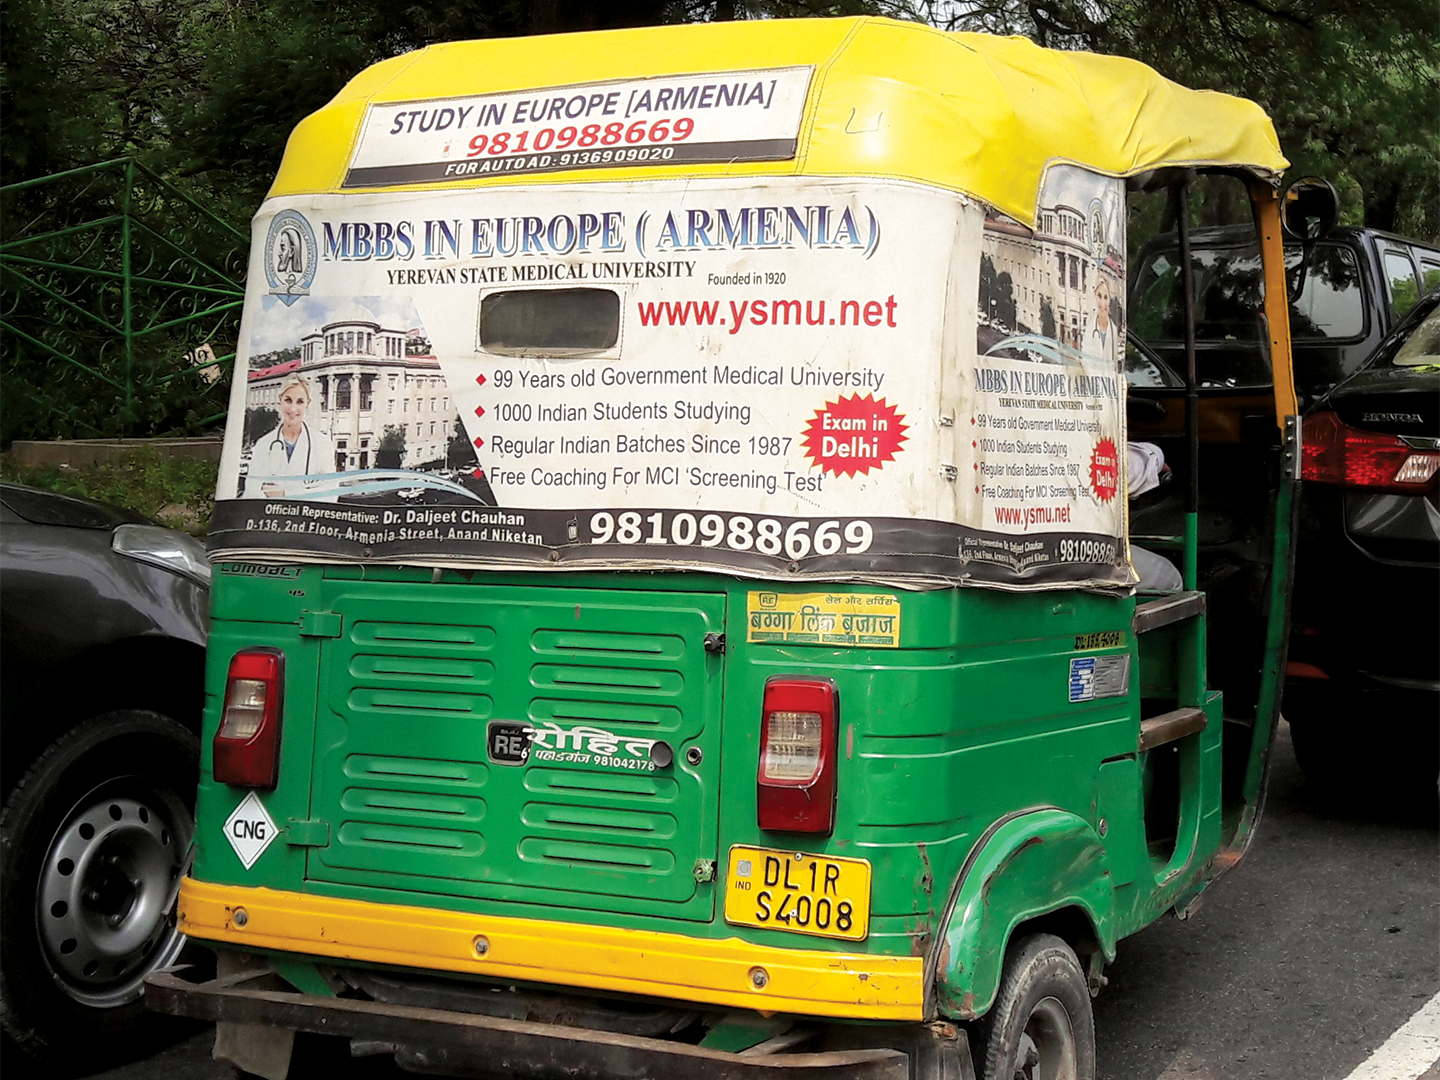 An auto-rickshaw in New Delhi advertises Yerevan State Medical University.